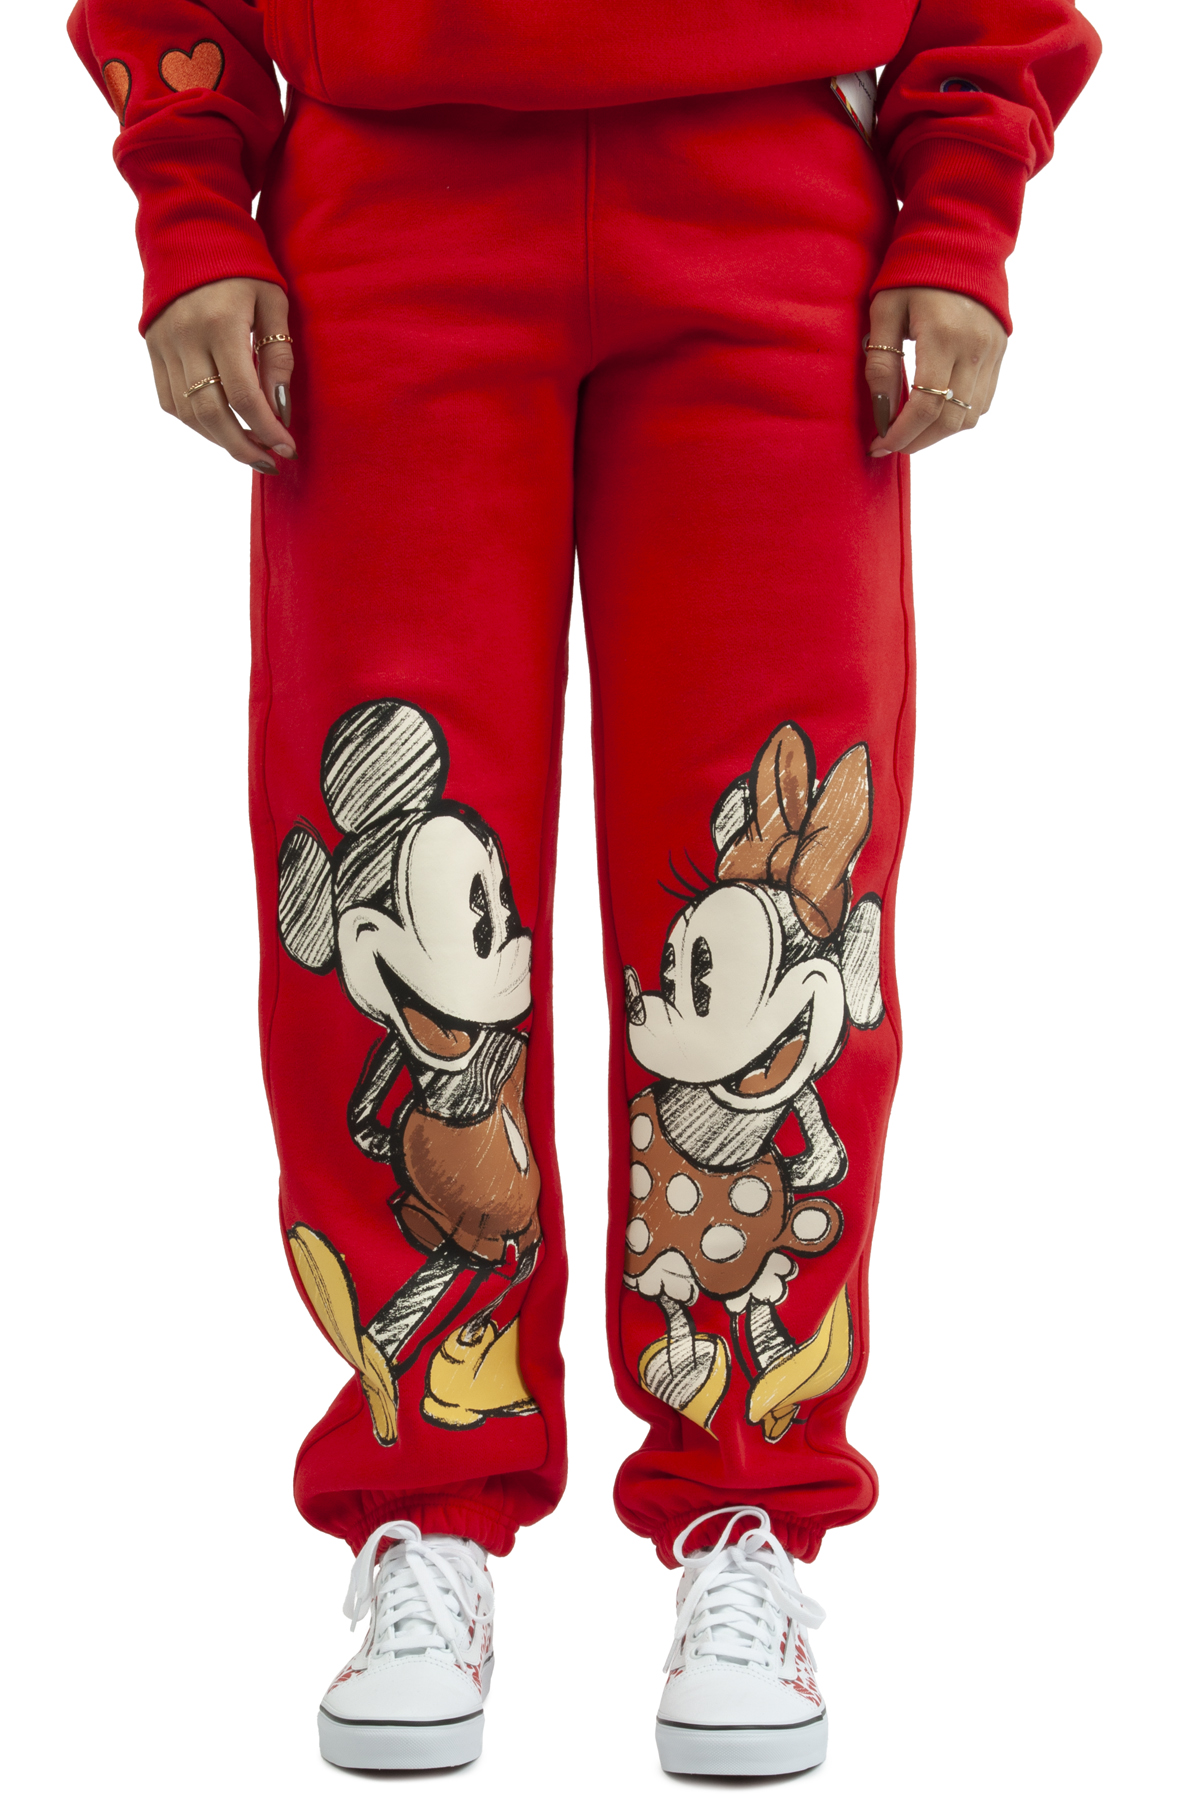 Mickey Mouse sweatpants